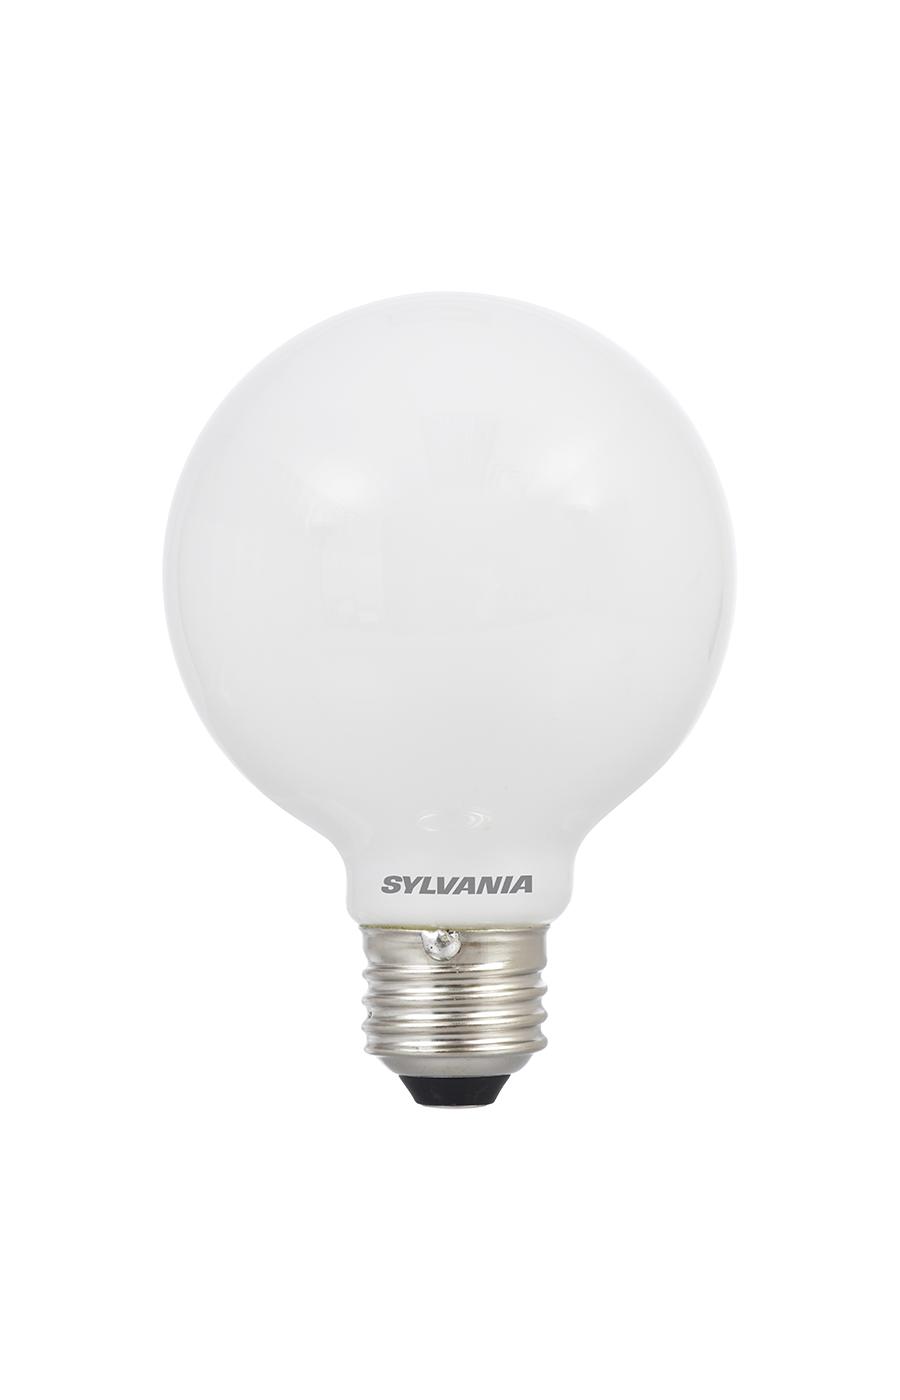 Sylvania TruWave G25 40-Watt Frosted LED Light Bulbs - Soft White; image 2 of 2